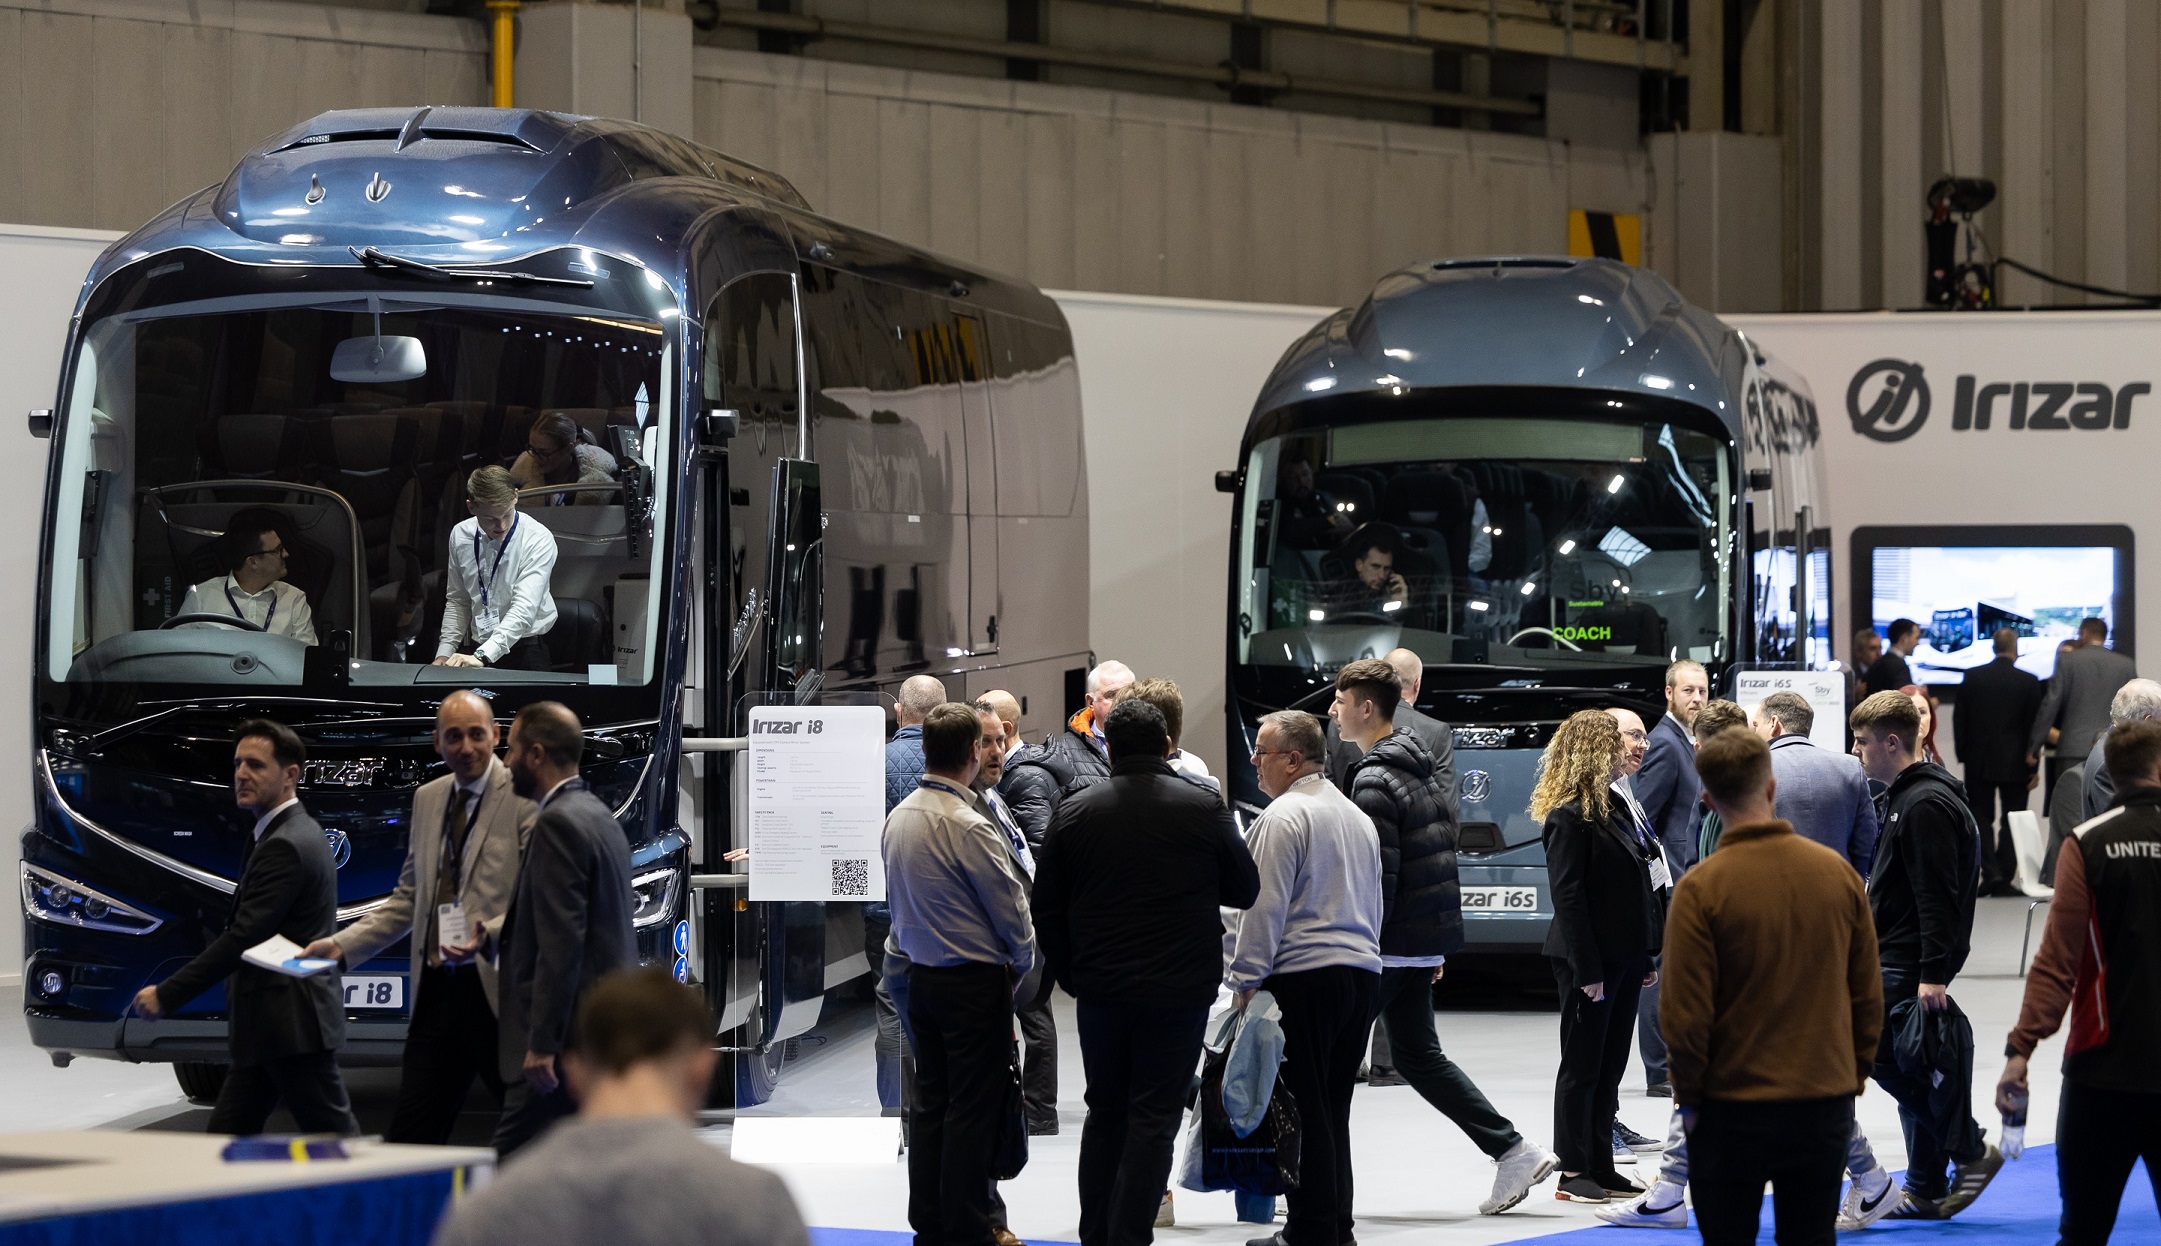 Irizar integral coach range showcased at Euro Bus Expo